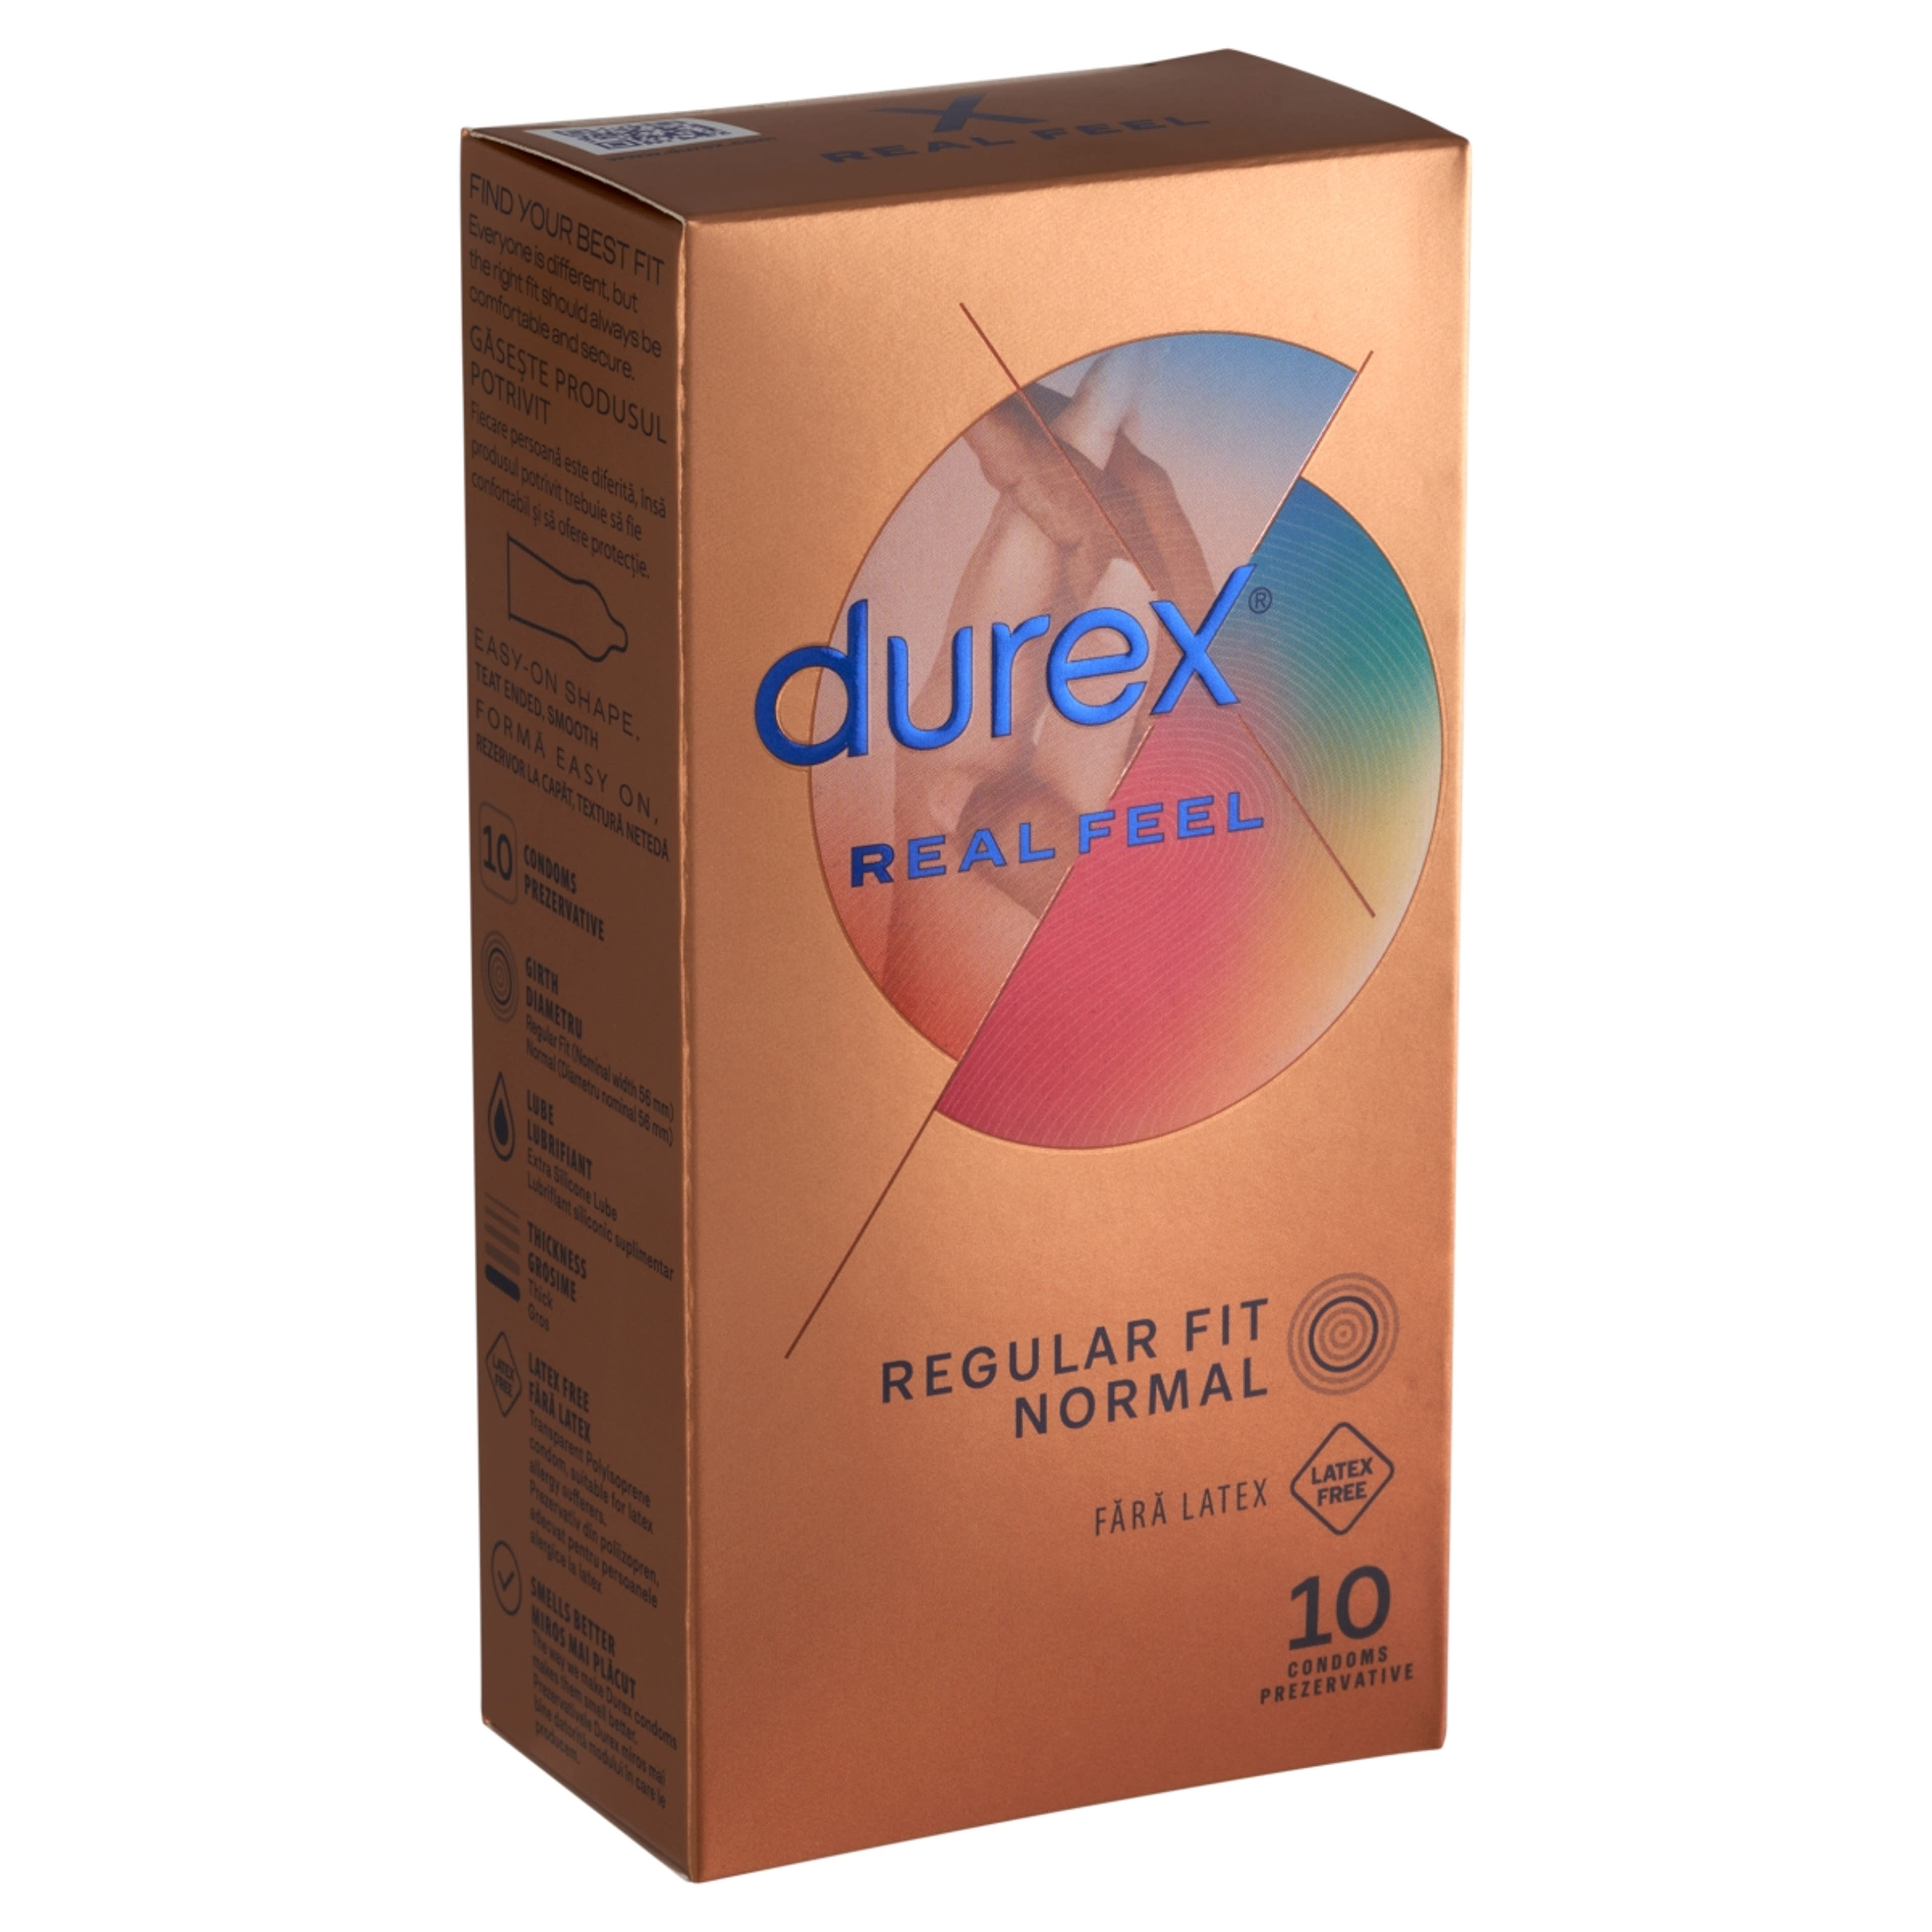 Durex Real feel óvszer - 10 db-2